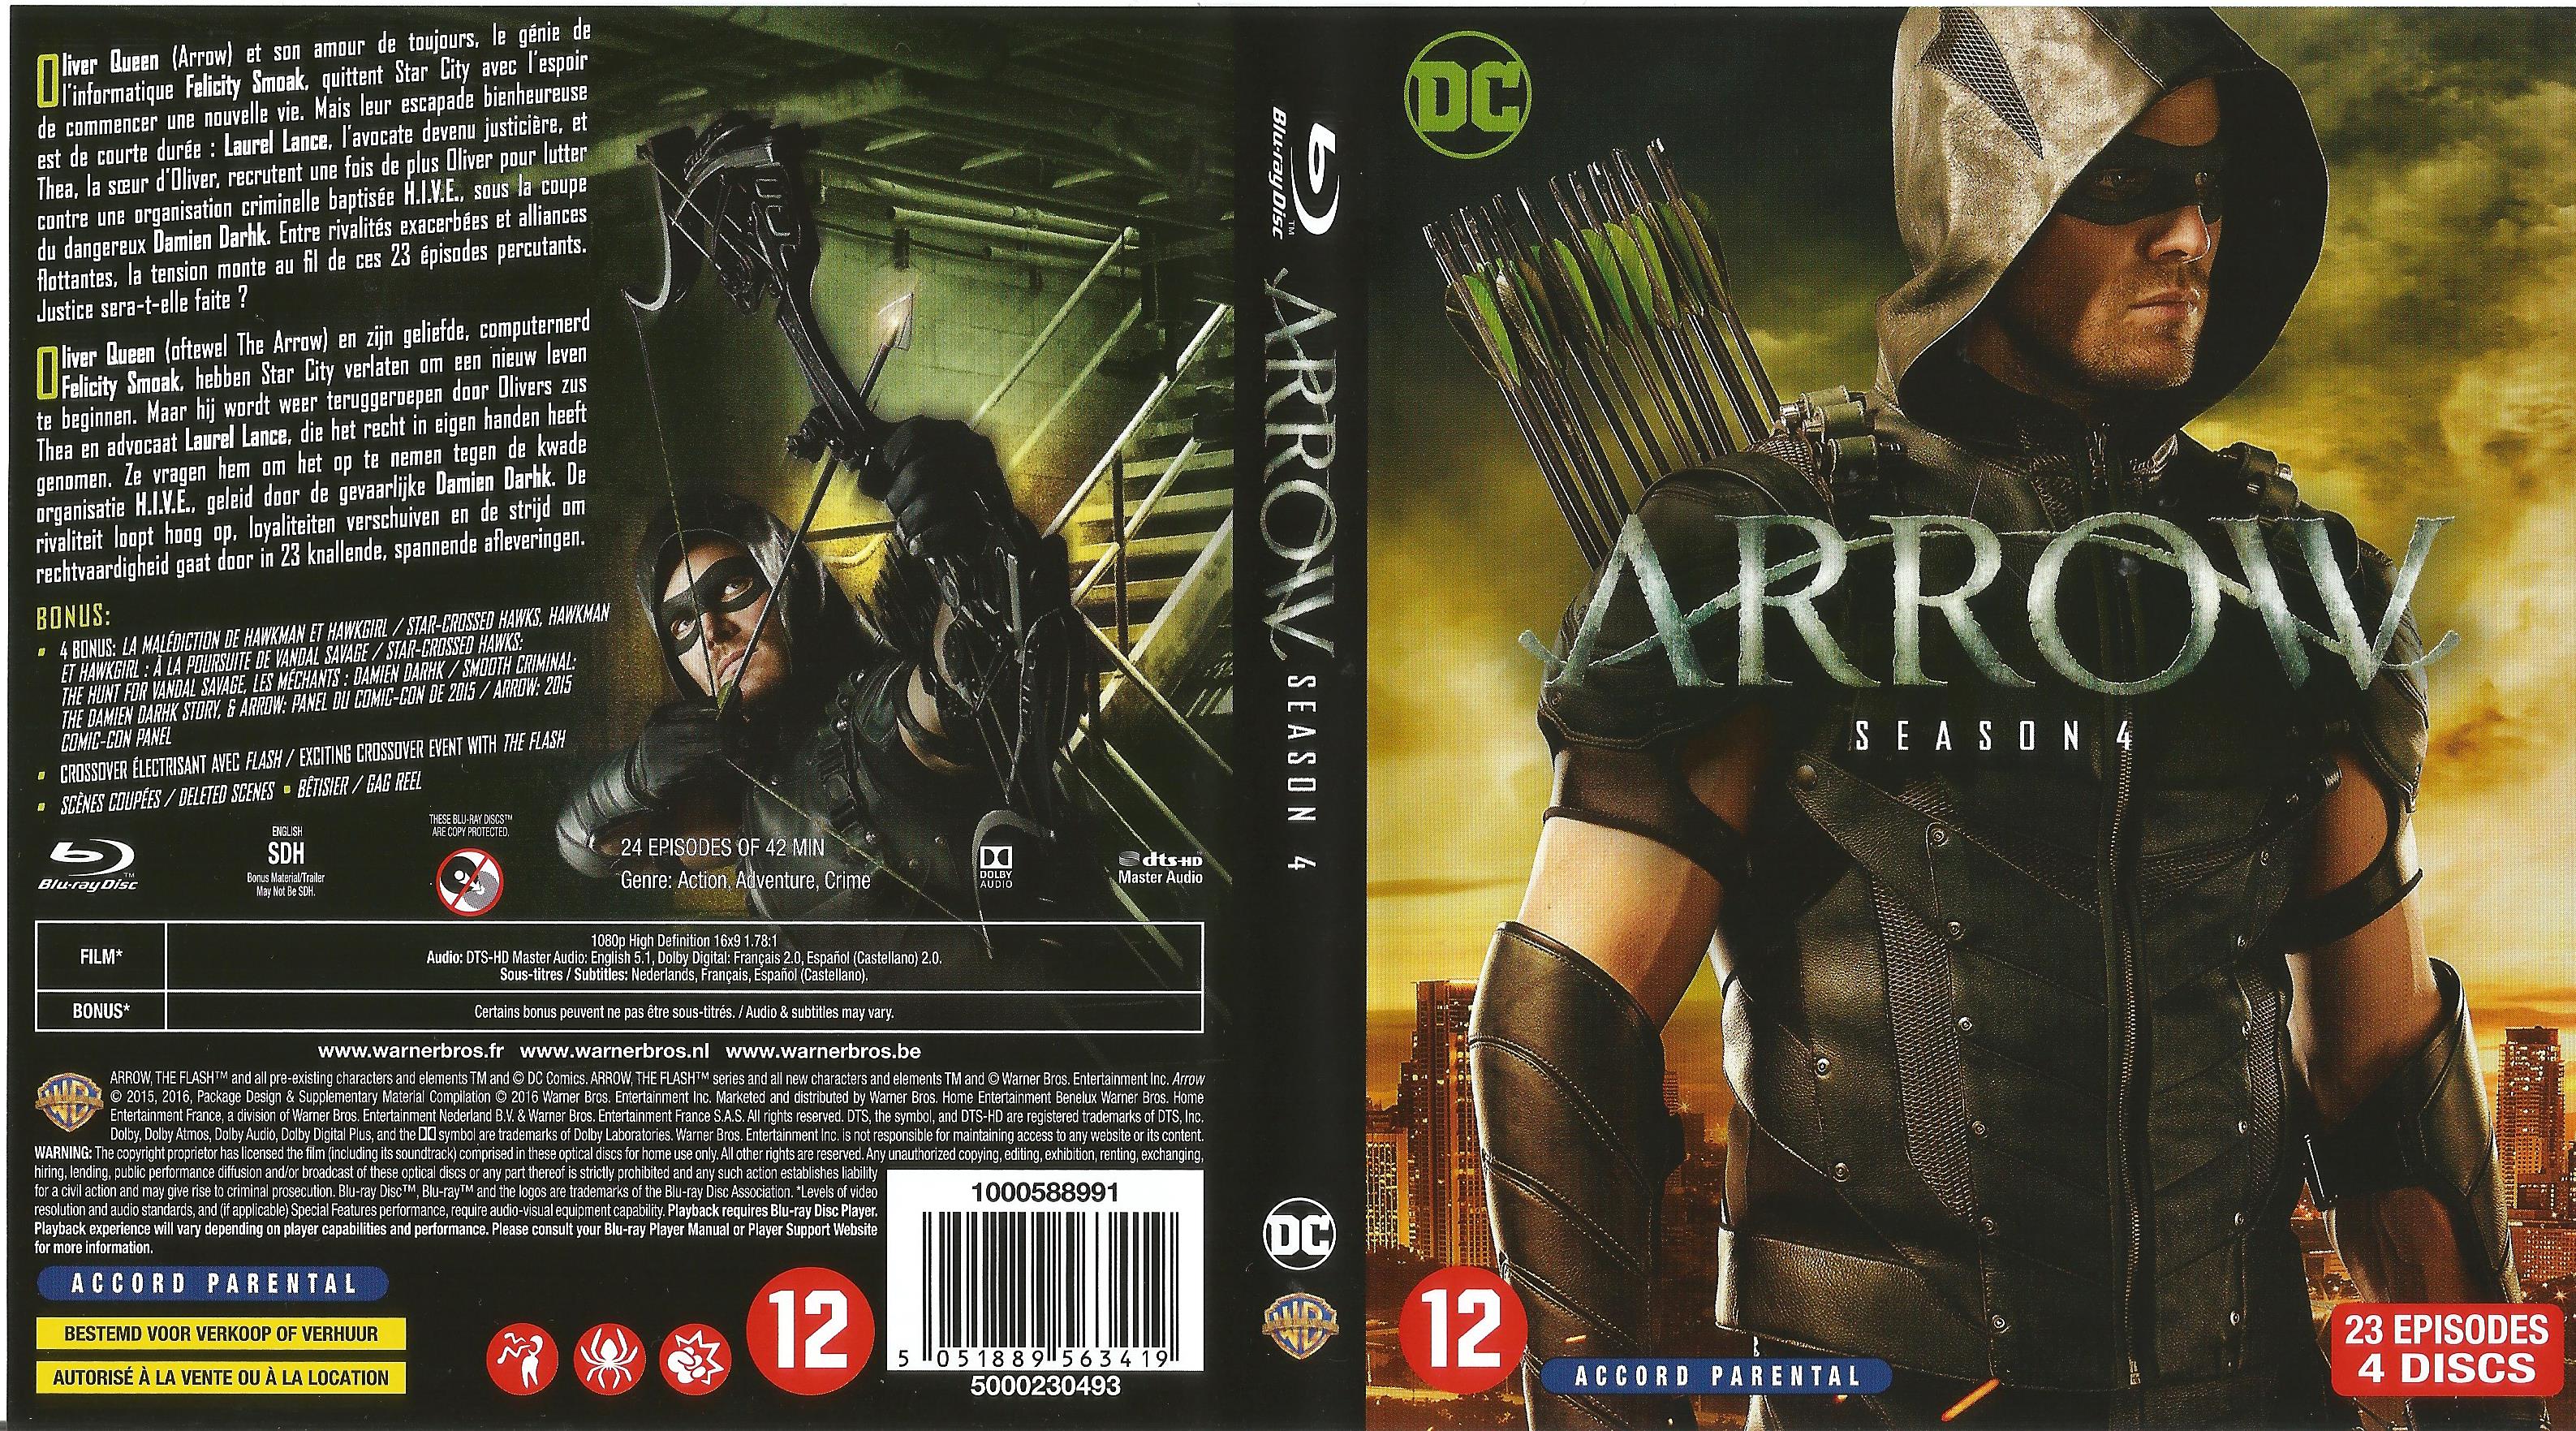 Jaquette DVD Arrow saison 4 (BLU-RAY)